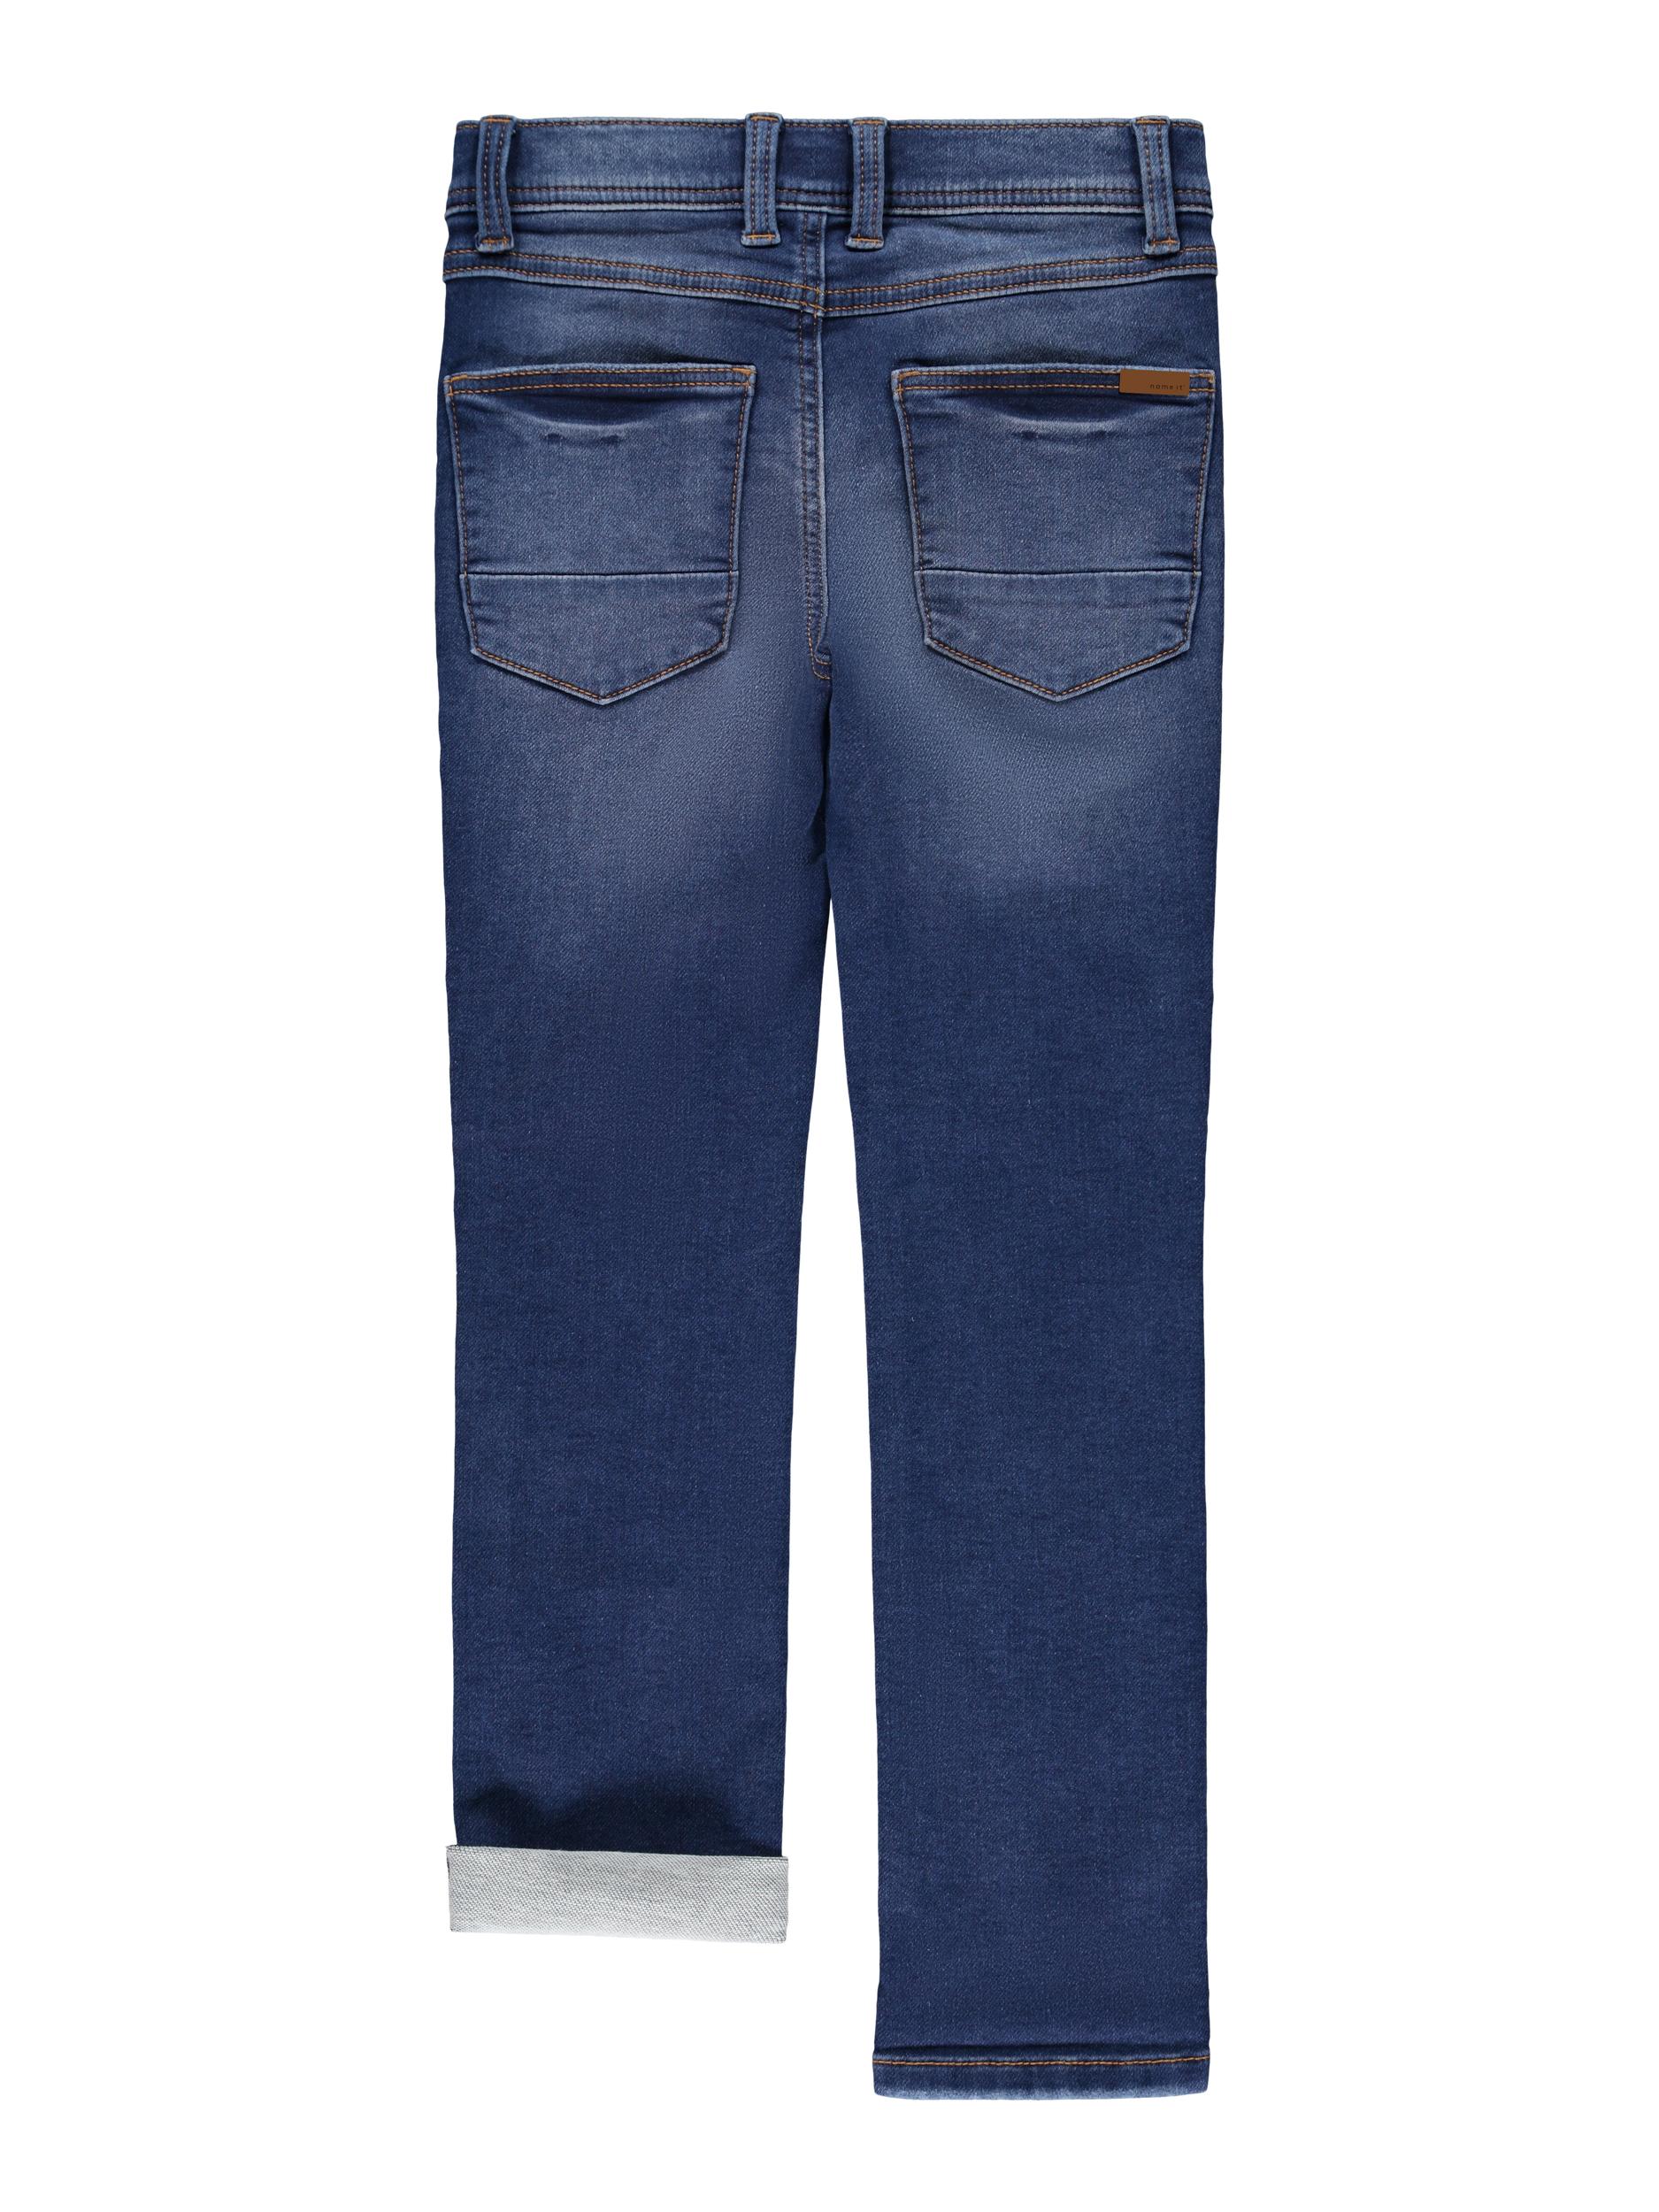  Theo Times Jeans, Dark Blue Denim, 116 cm